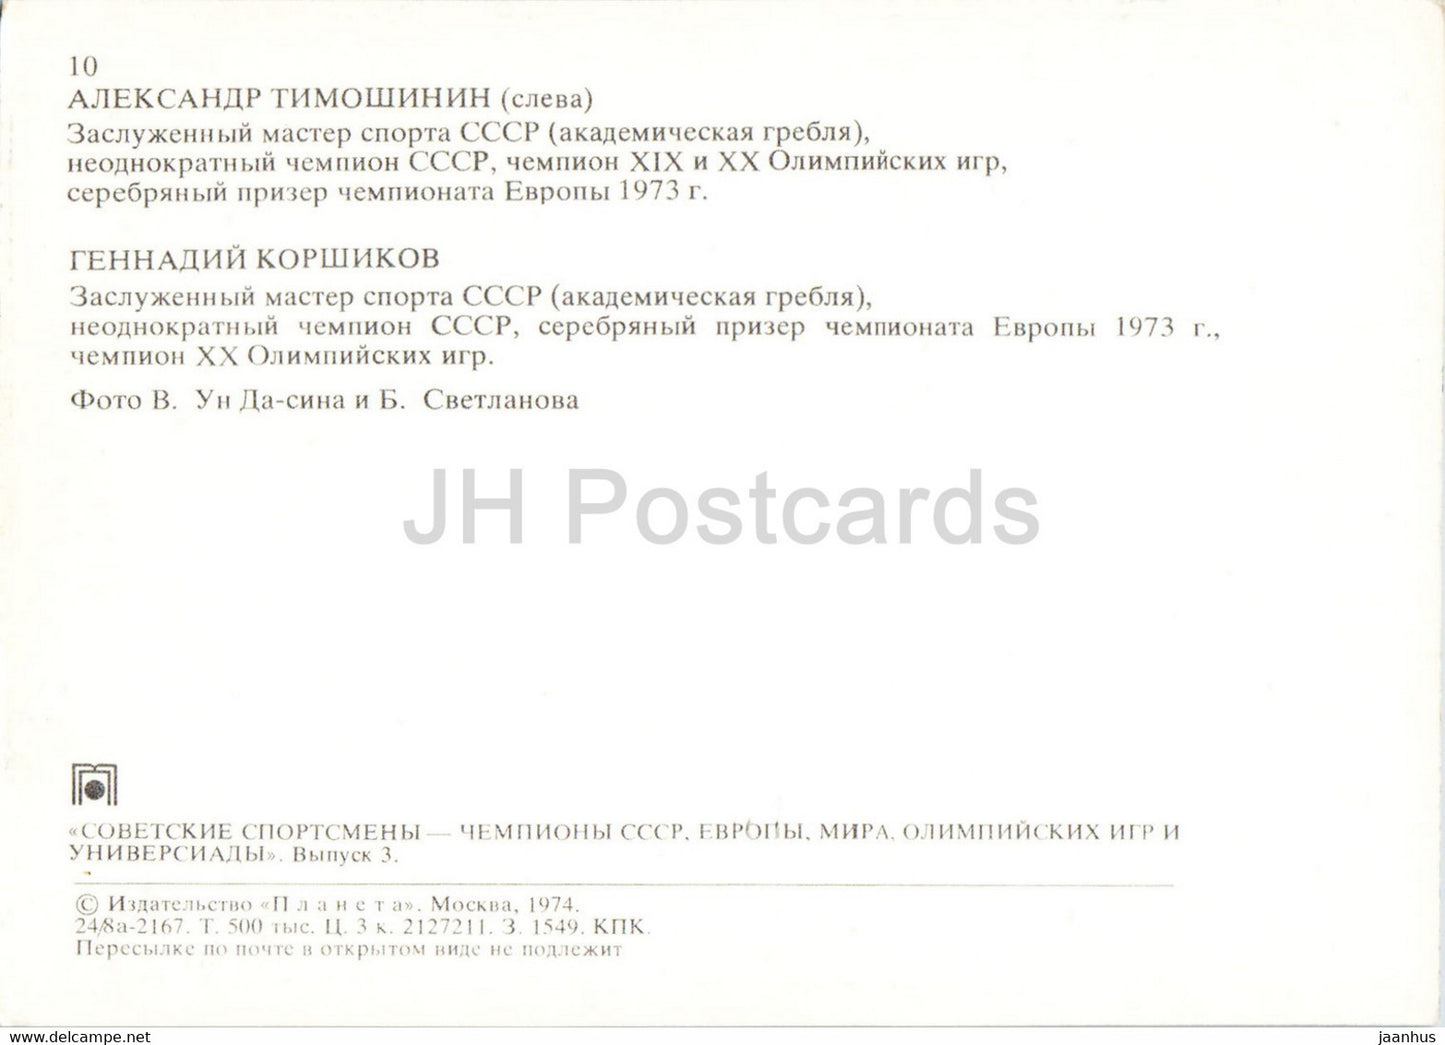 Alexander Timoshinin - Gennady Korshikov - aviron - champions soviétiques - sports - 1974 - Russie URSS - inutilisé